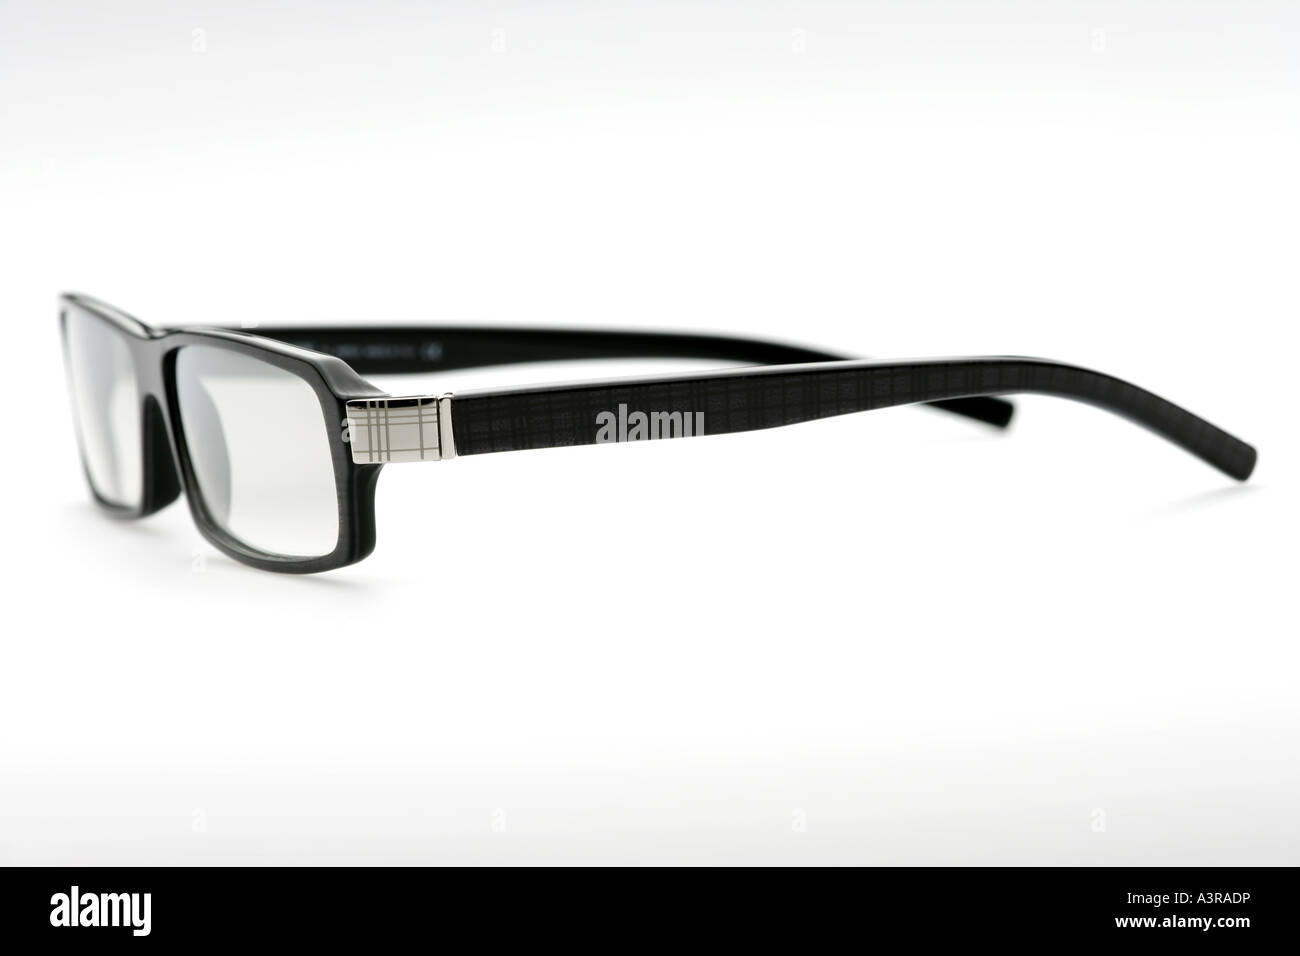 Burberry sunglasses Stock Photo - Alamy